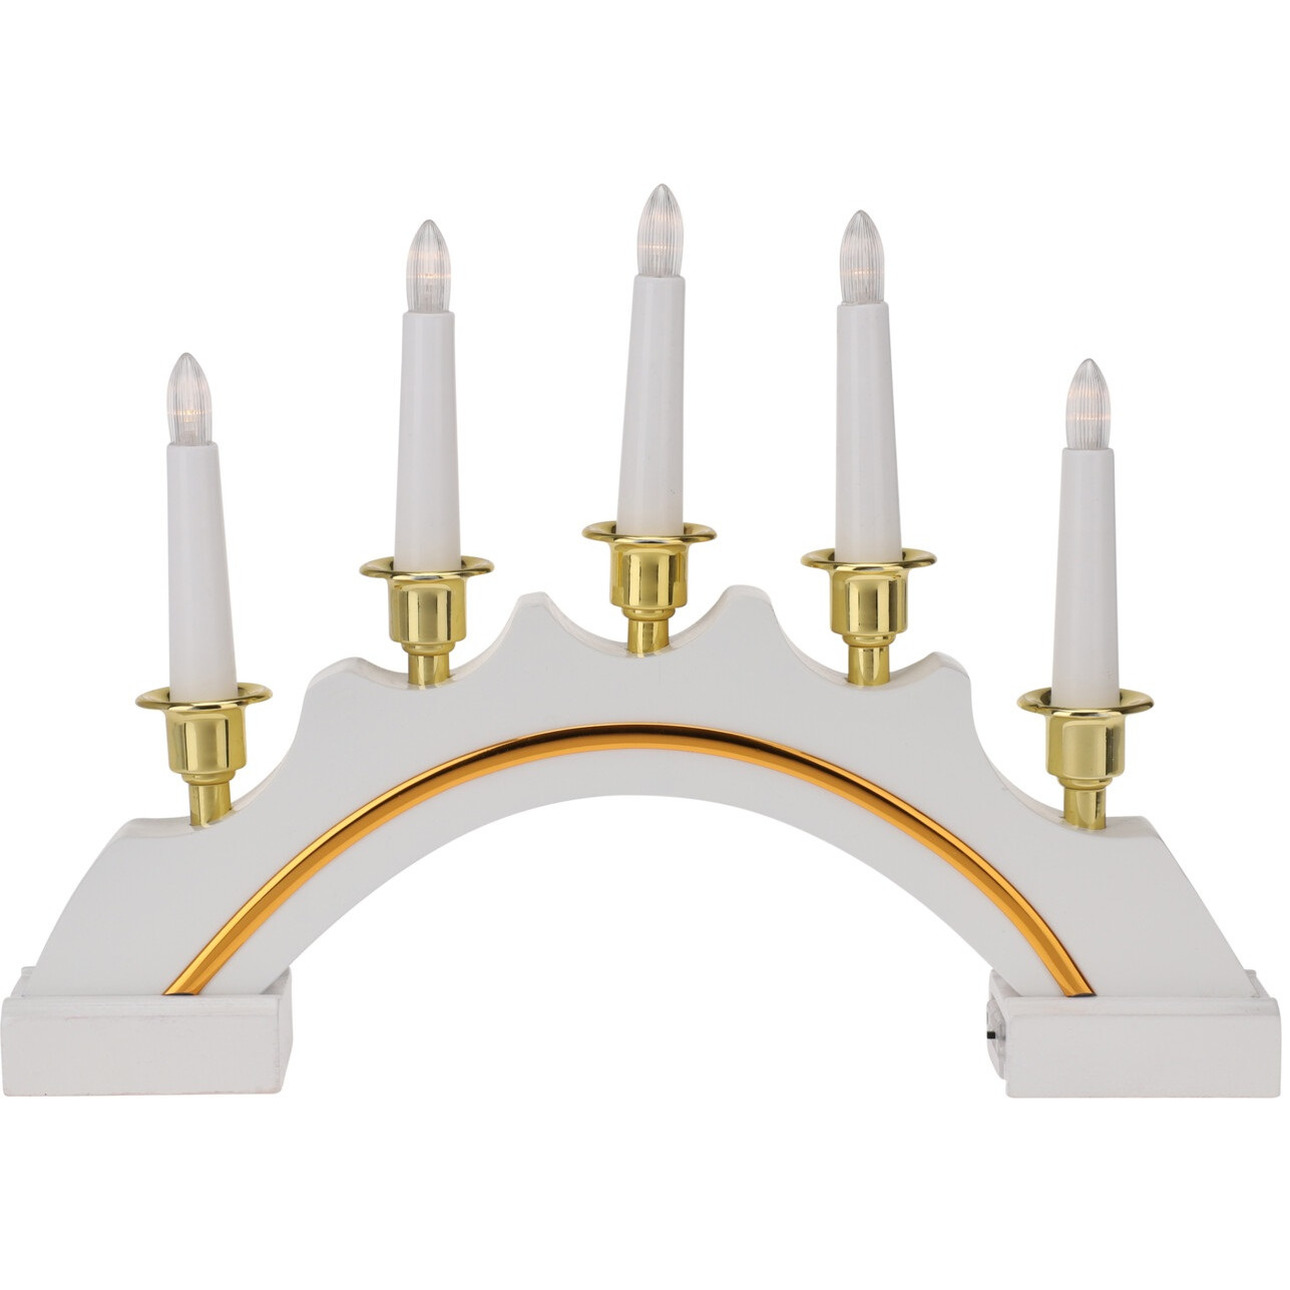 Kaarsenbrug wit-goud van kunststof met LED verlichting 37 x 5 x 27 cm